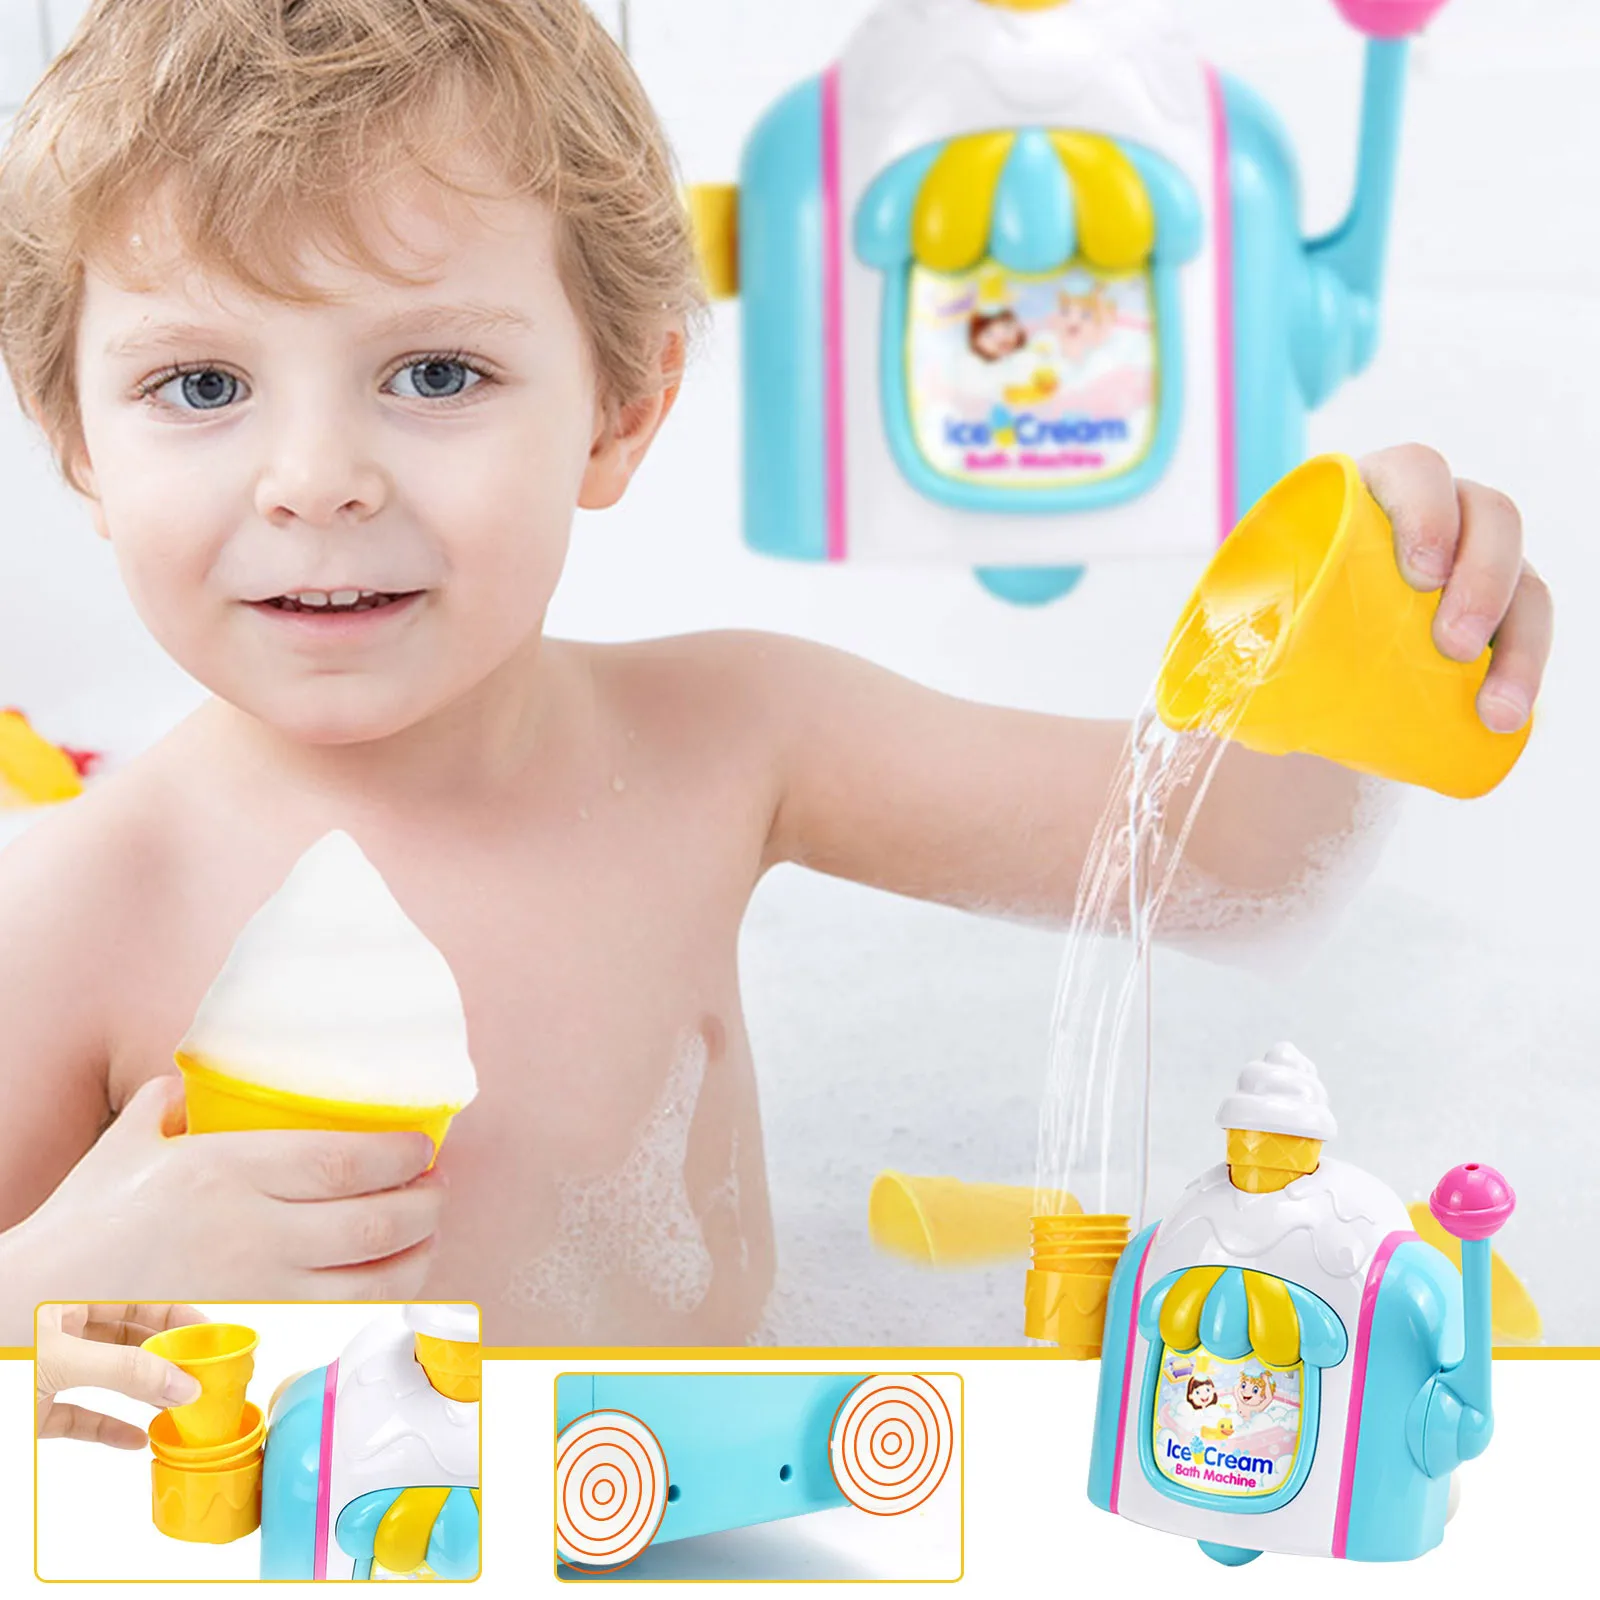 

Children's toys ice cream bubble machine children's bath bath toys bathroom water blowing bubbles HOT игѬђки для деей 40*